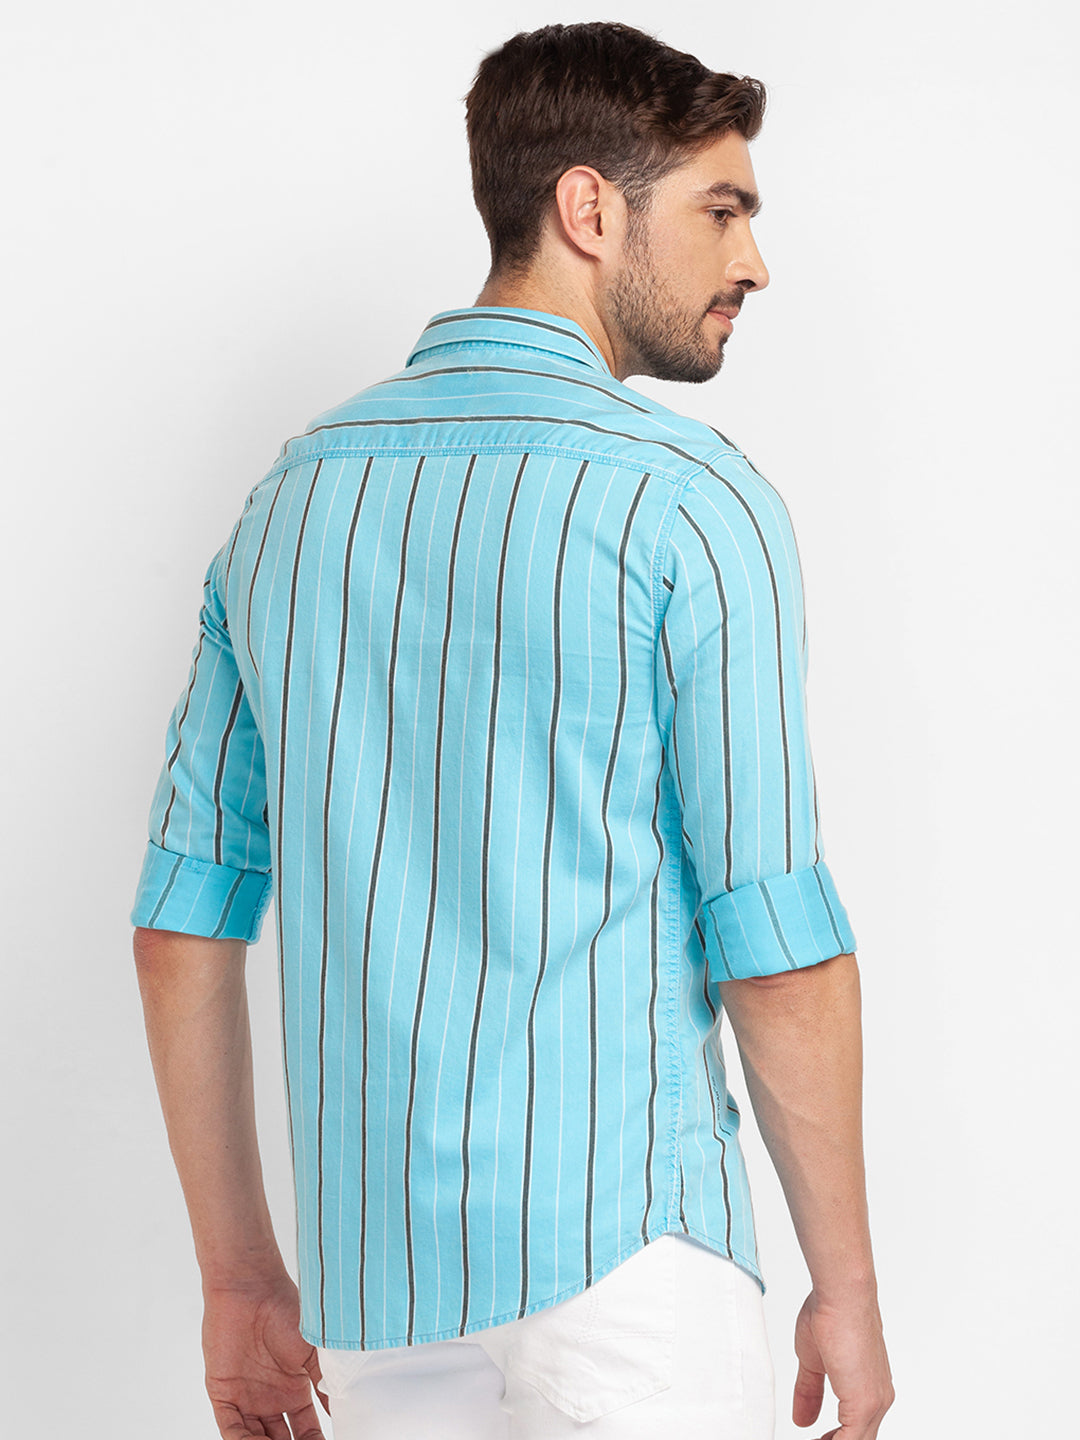 Spykar Aqua Blue Cotton Full Sleeve Stripes Shirt For Men